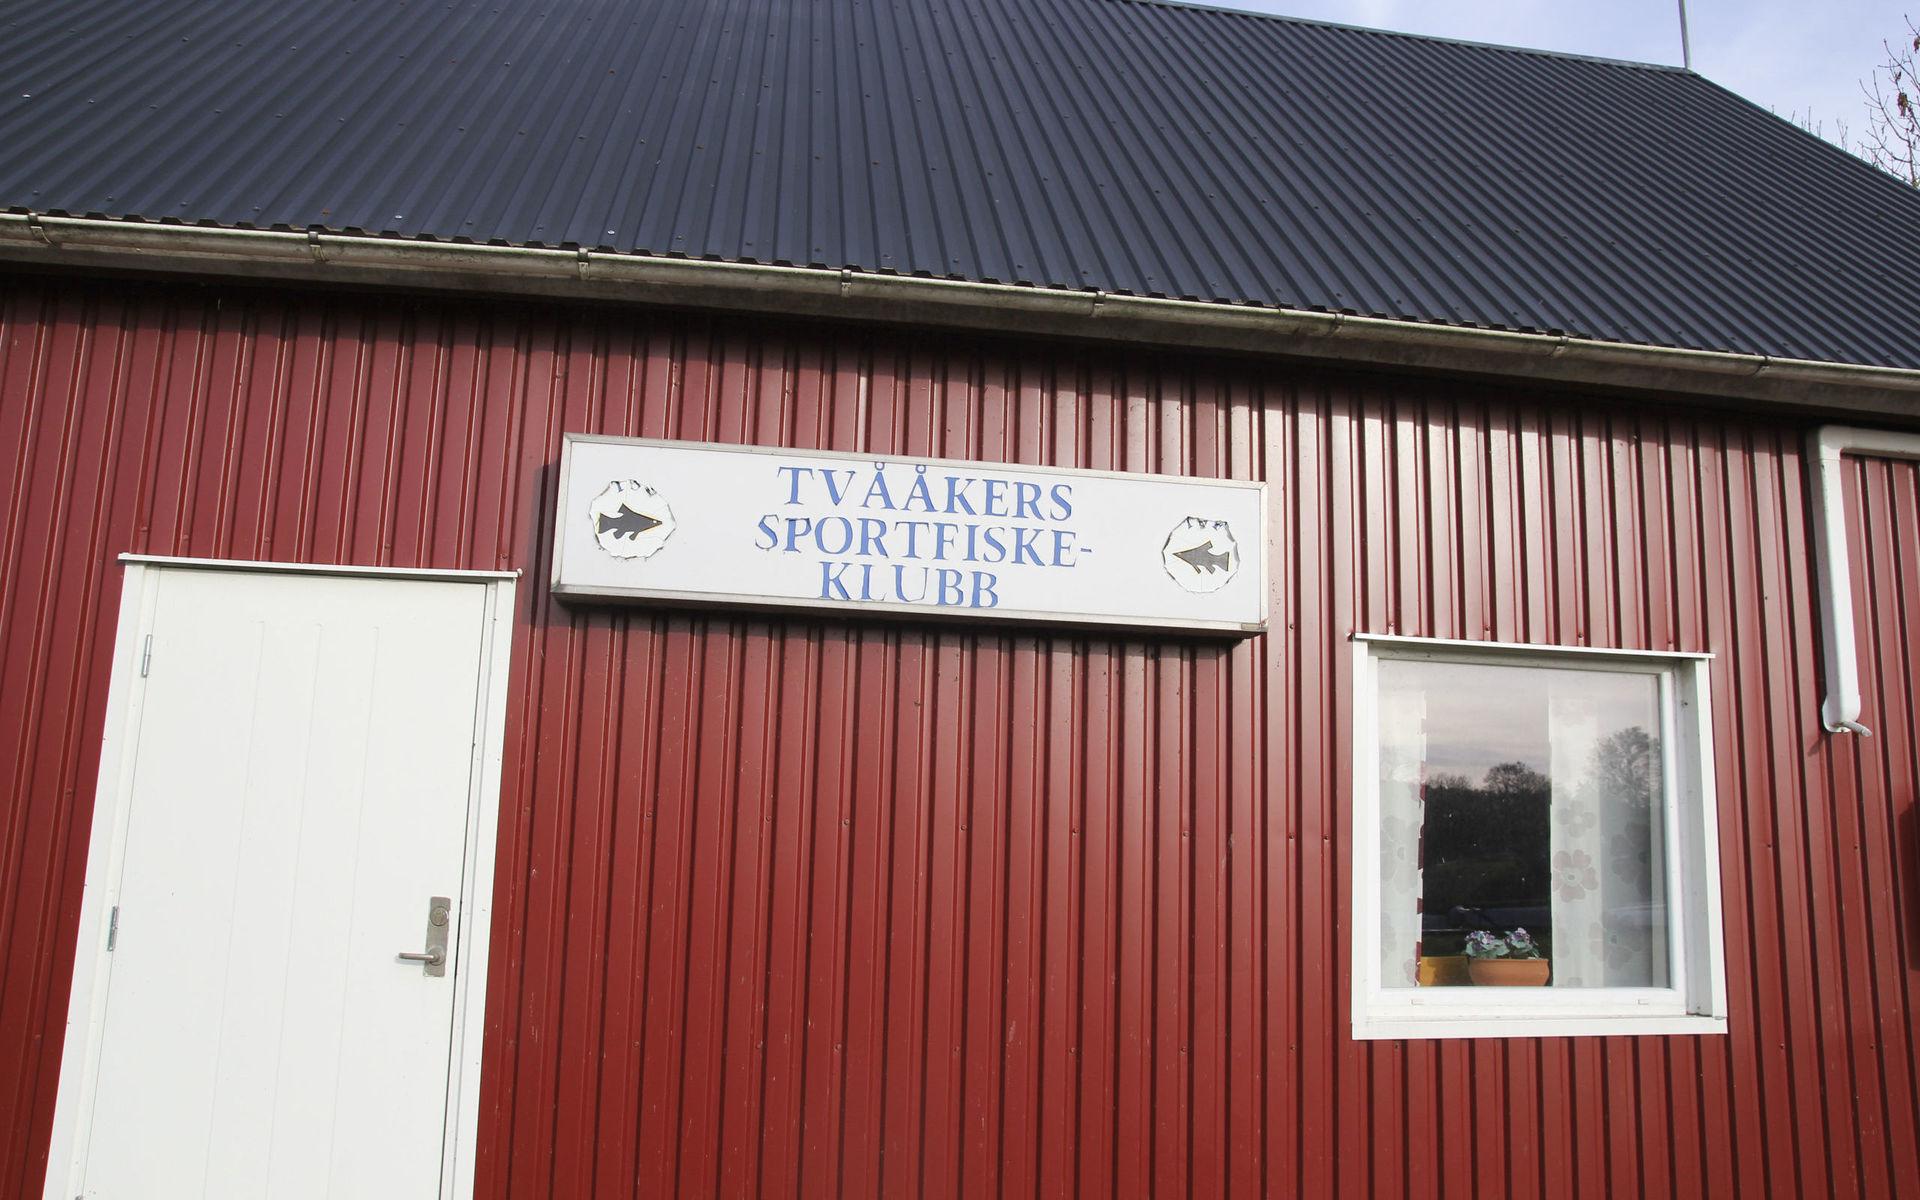 Klubbstugan köptes av Varberg energi 1994. Huset byggdes 1989.